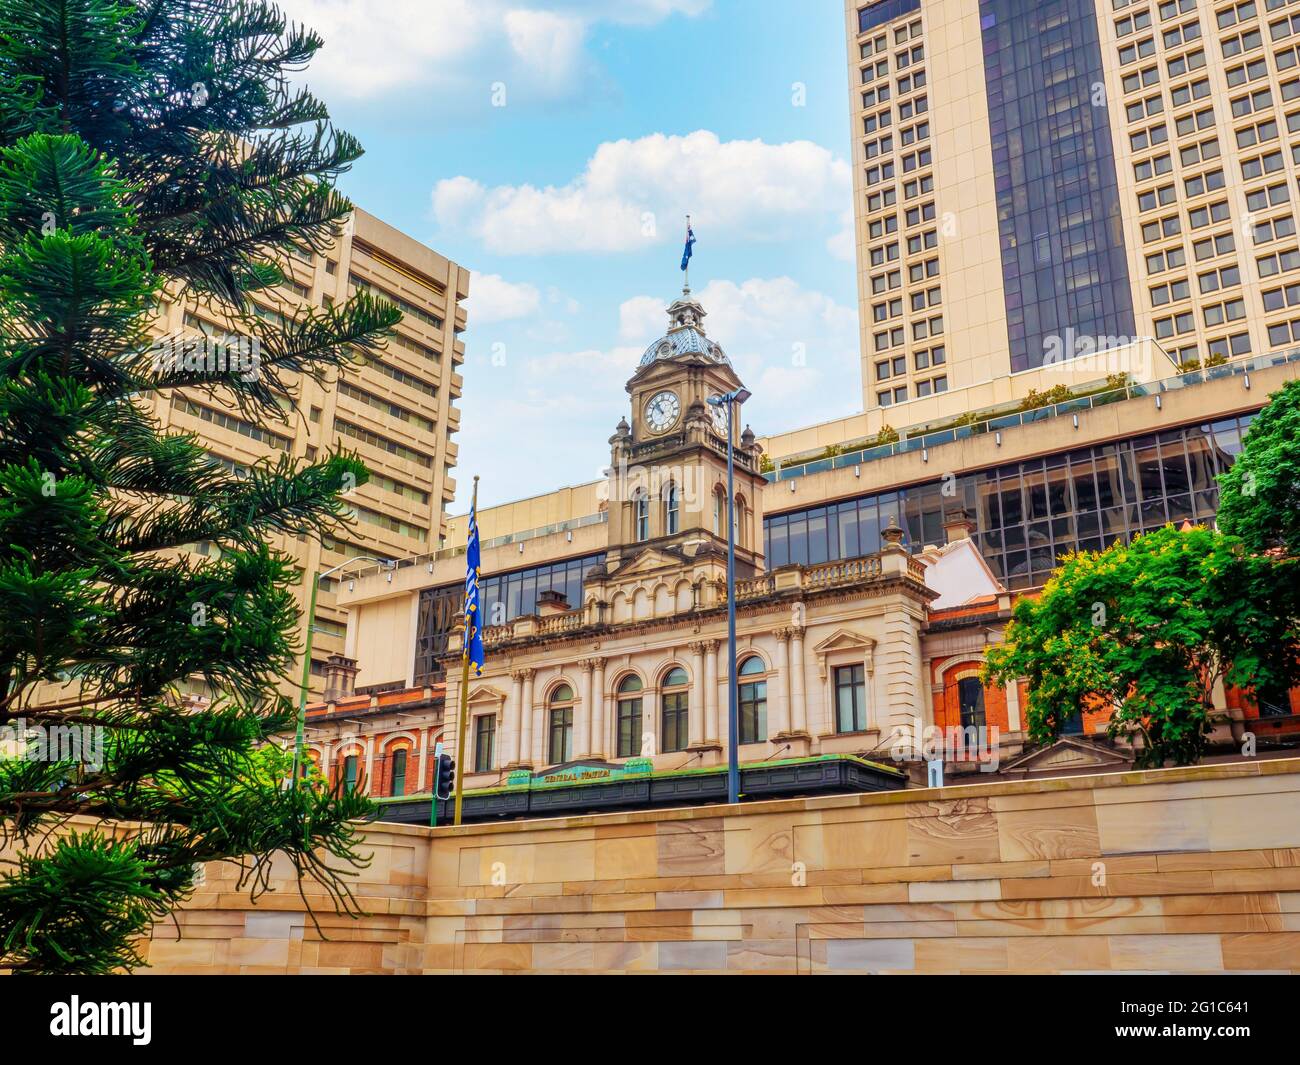 Central railway station, Brisbane, Australia. Facade and hotel building behind. Brisbane, Queensland, Australia. Stock Photo